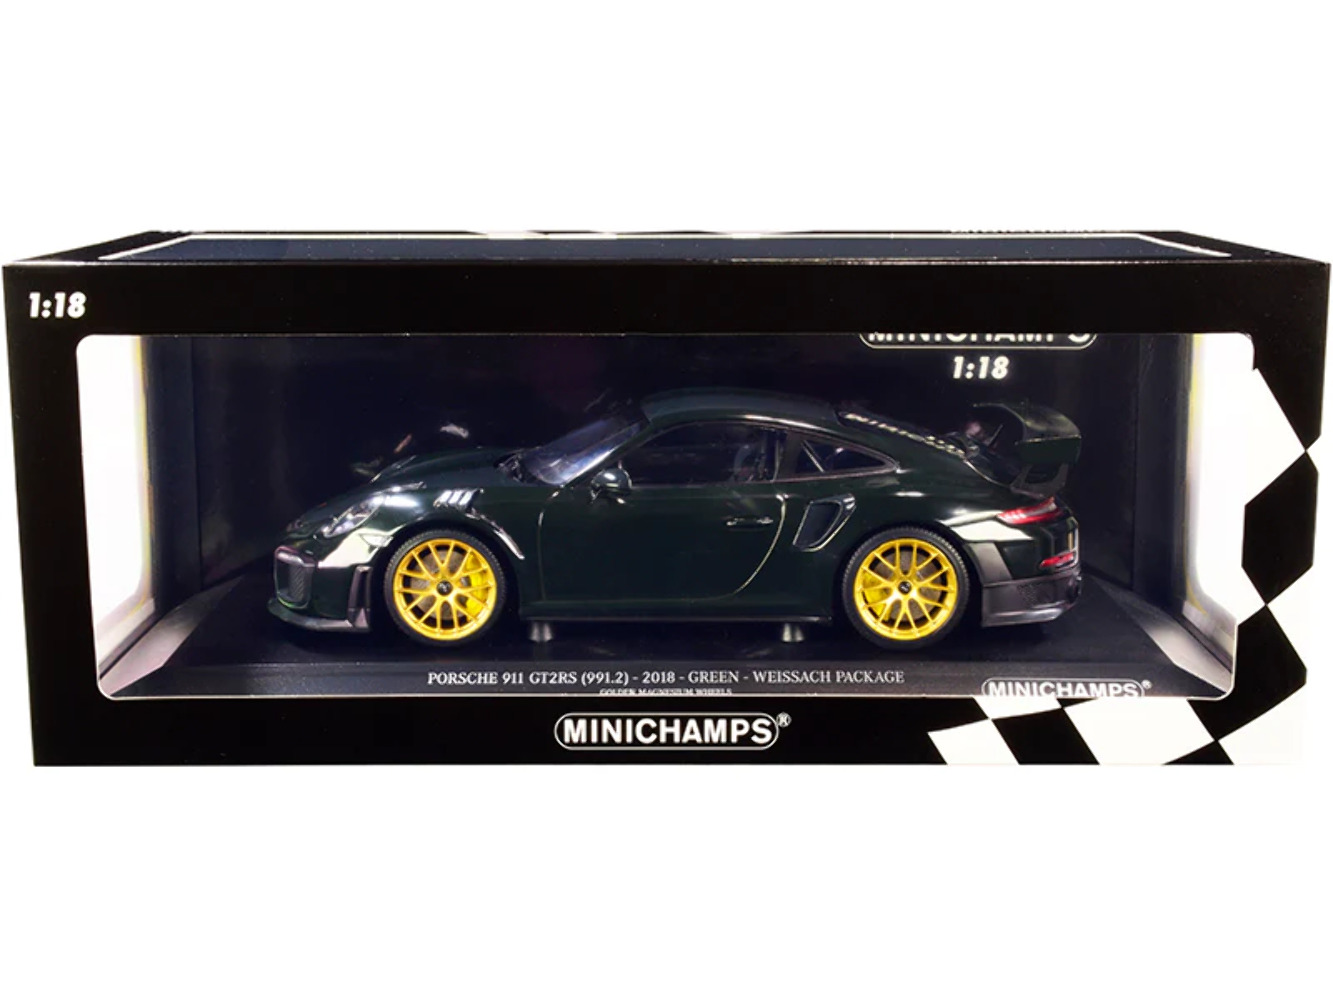 2018 Porsche 911 GT2RS (991.2) Weissach Package Dark Green with Carbon Stripes a